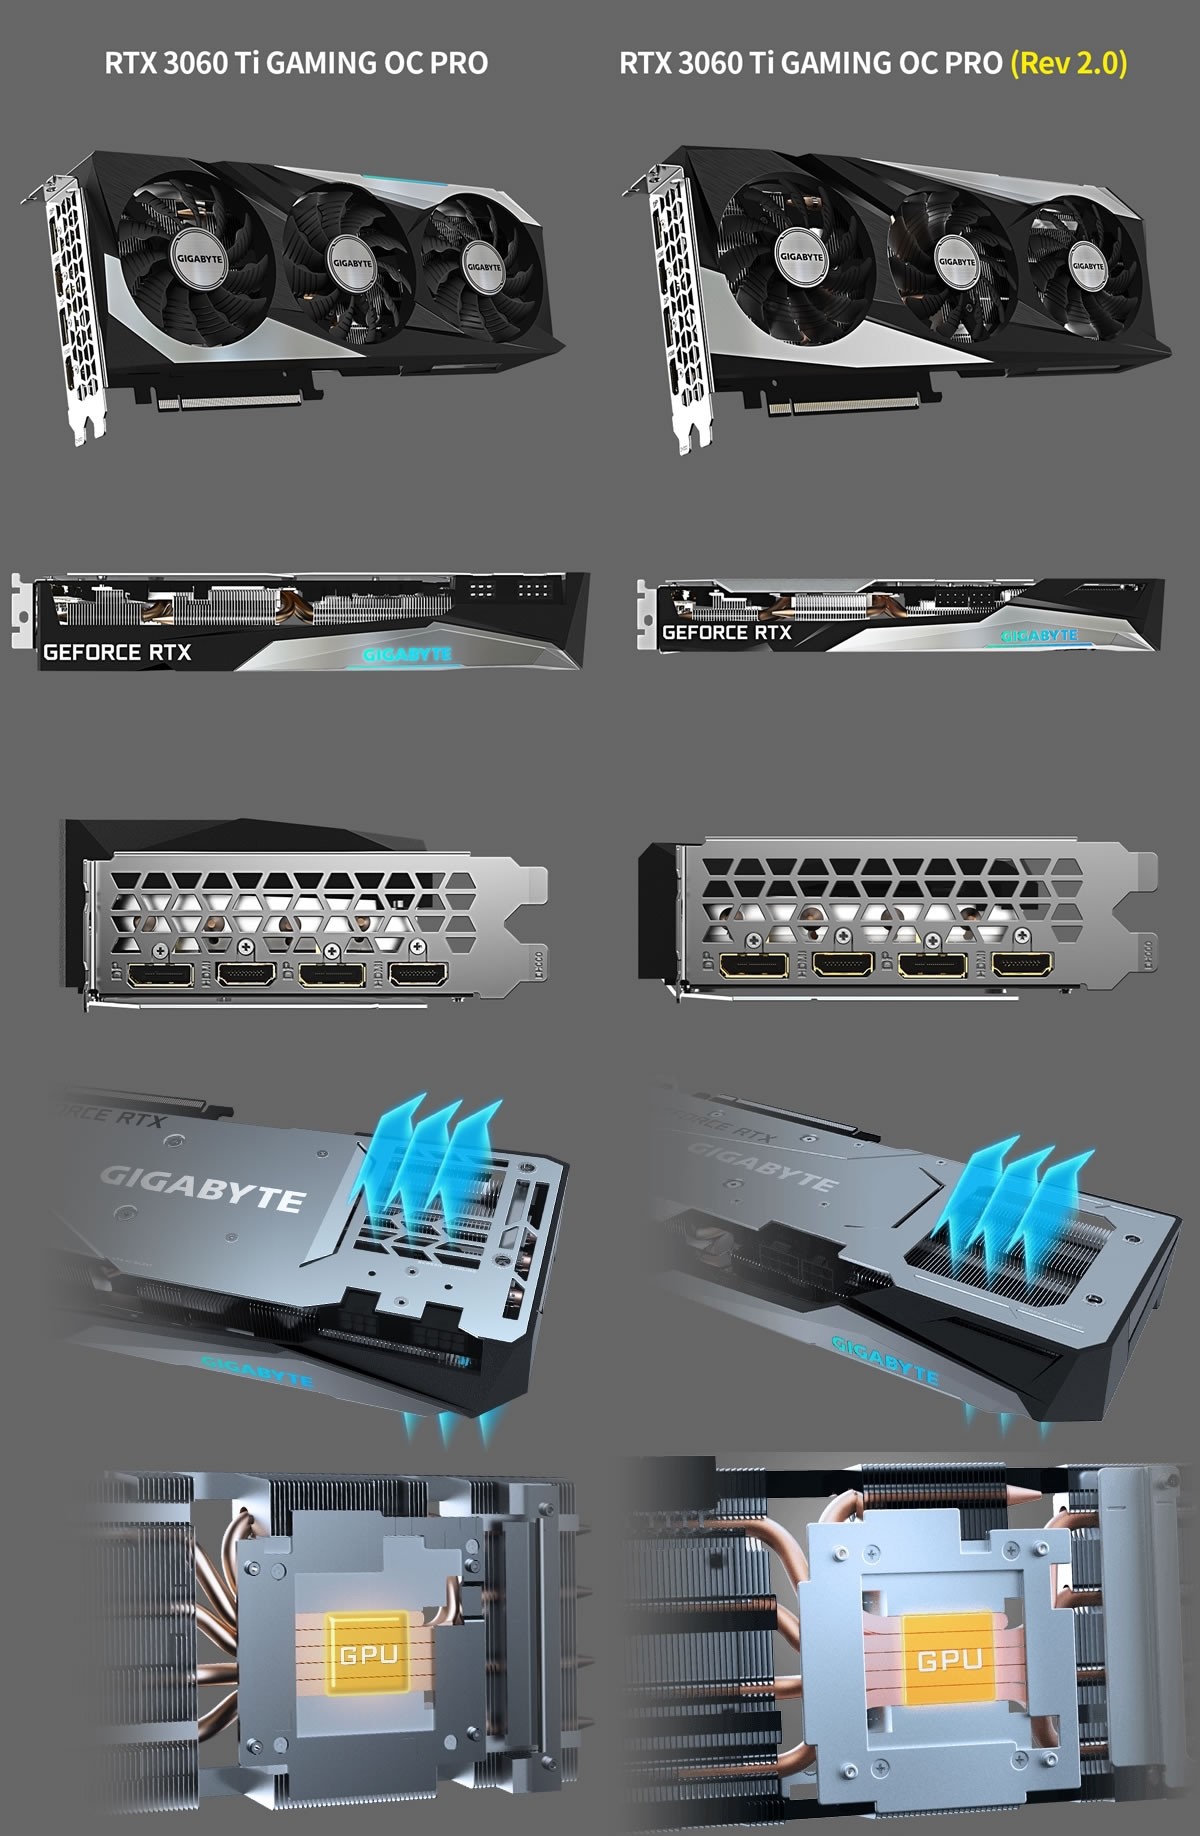 GIGABYTE présente une GeForce RTX 3060 Ti Gaming OC PRO en 2 slots